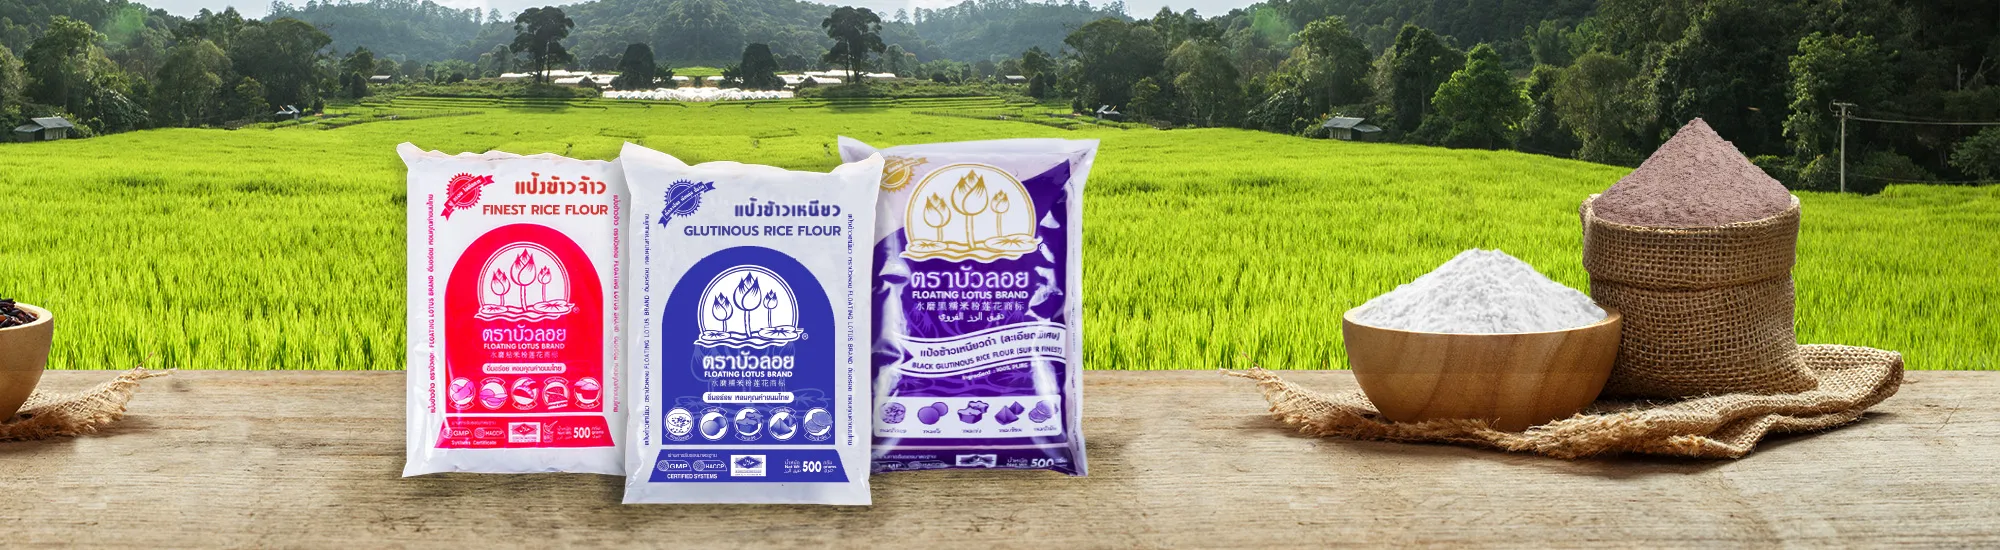 Thailand Black glutinous rice flour,  Thailand rice flour, 